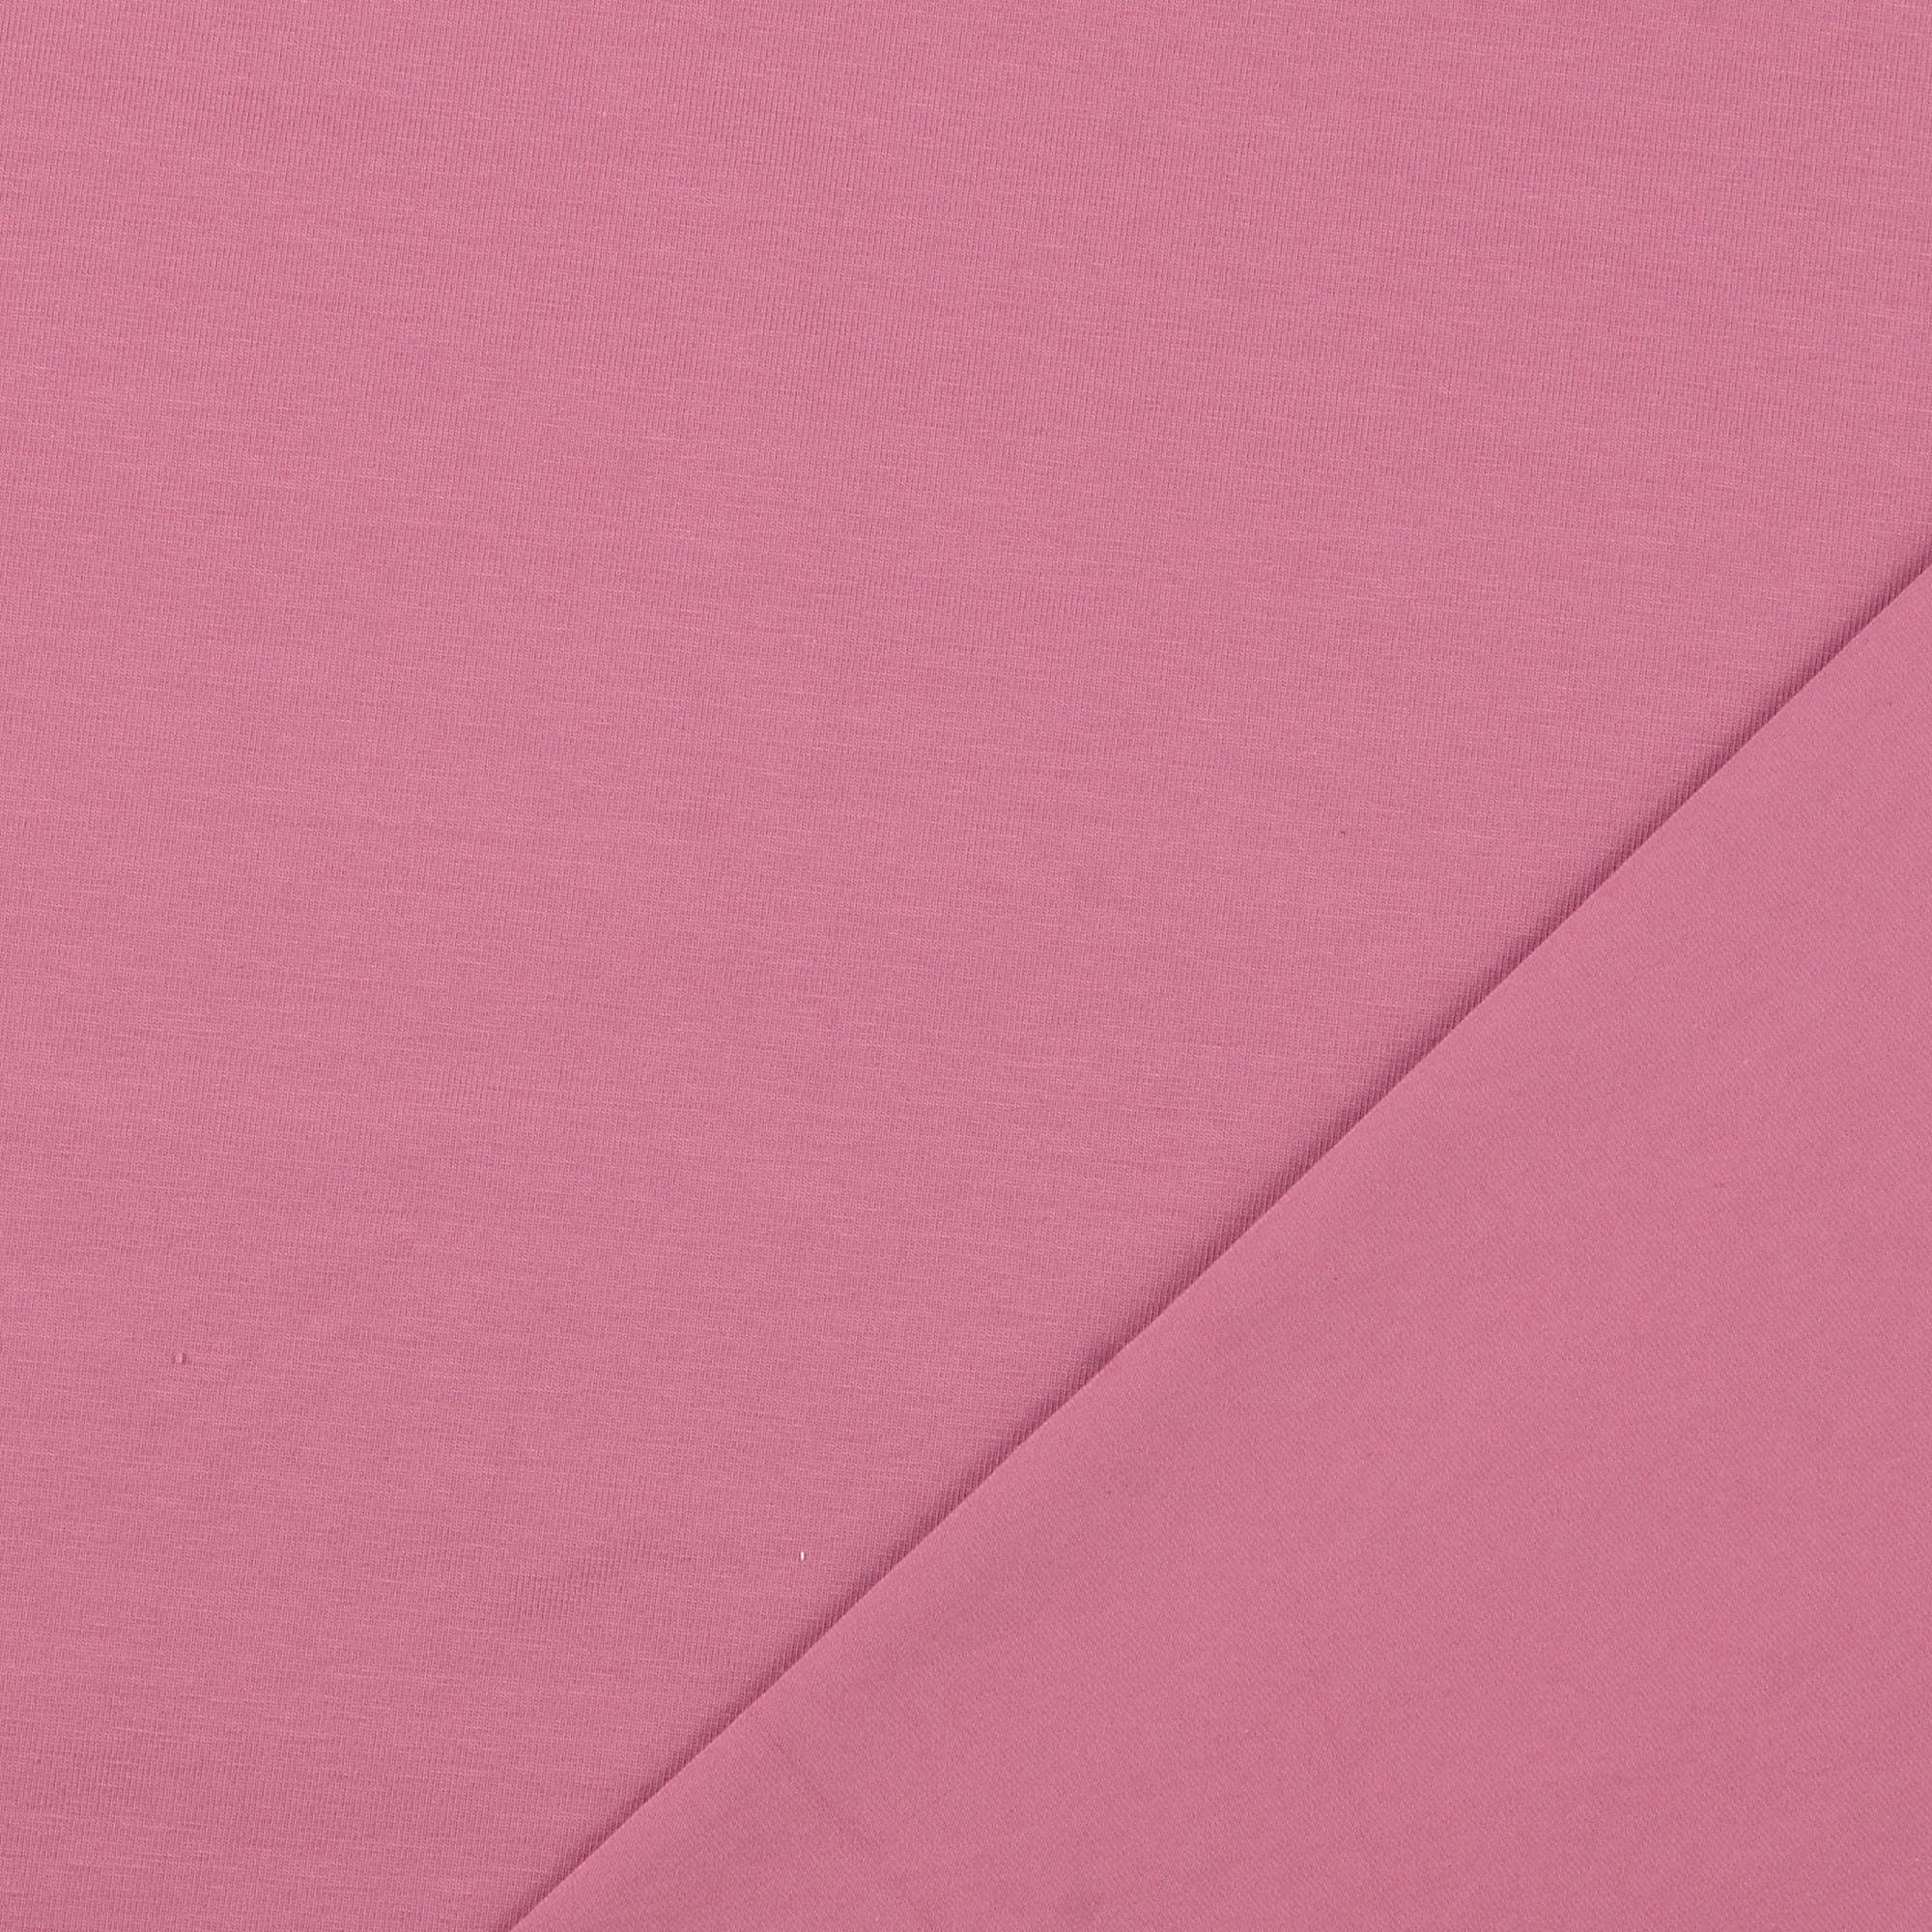 Essential Chic Pale Violet Cotton Jersey Fabric